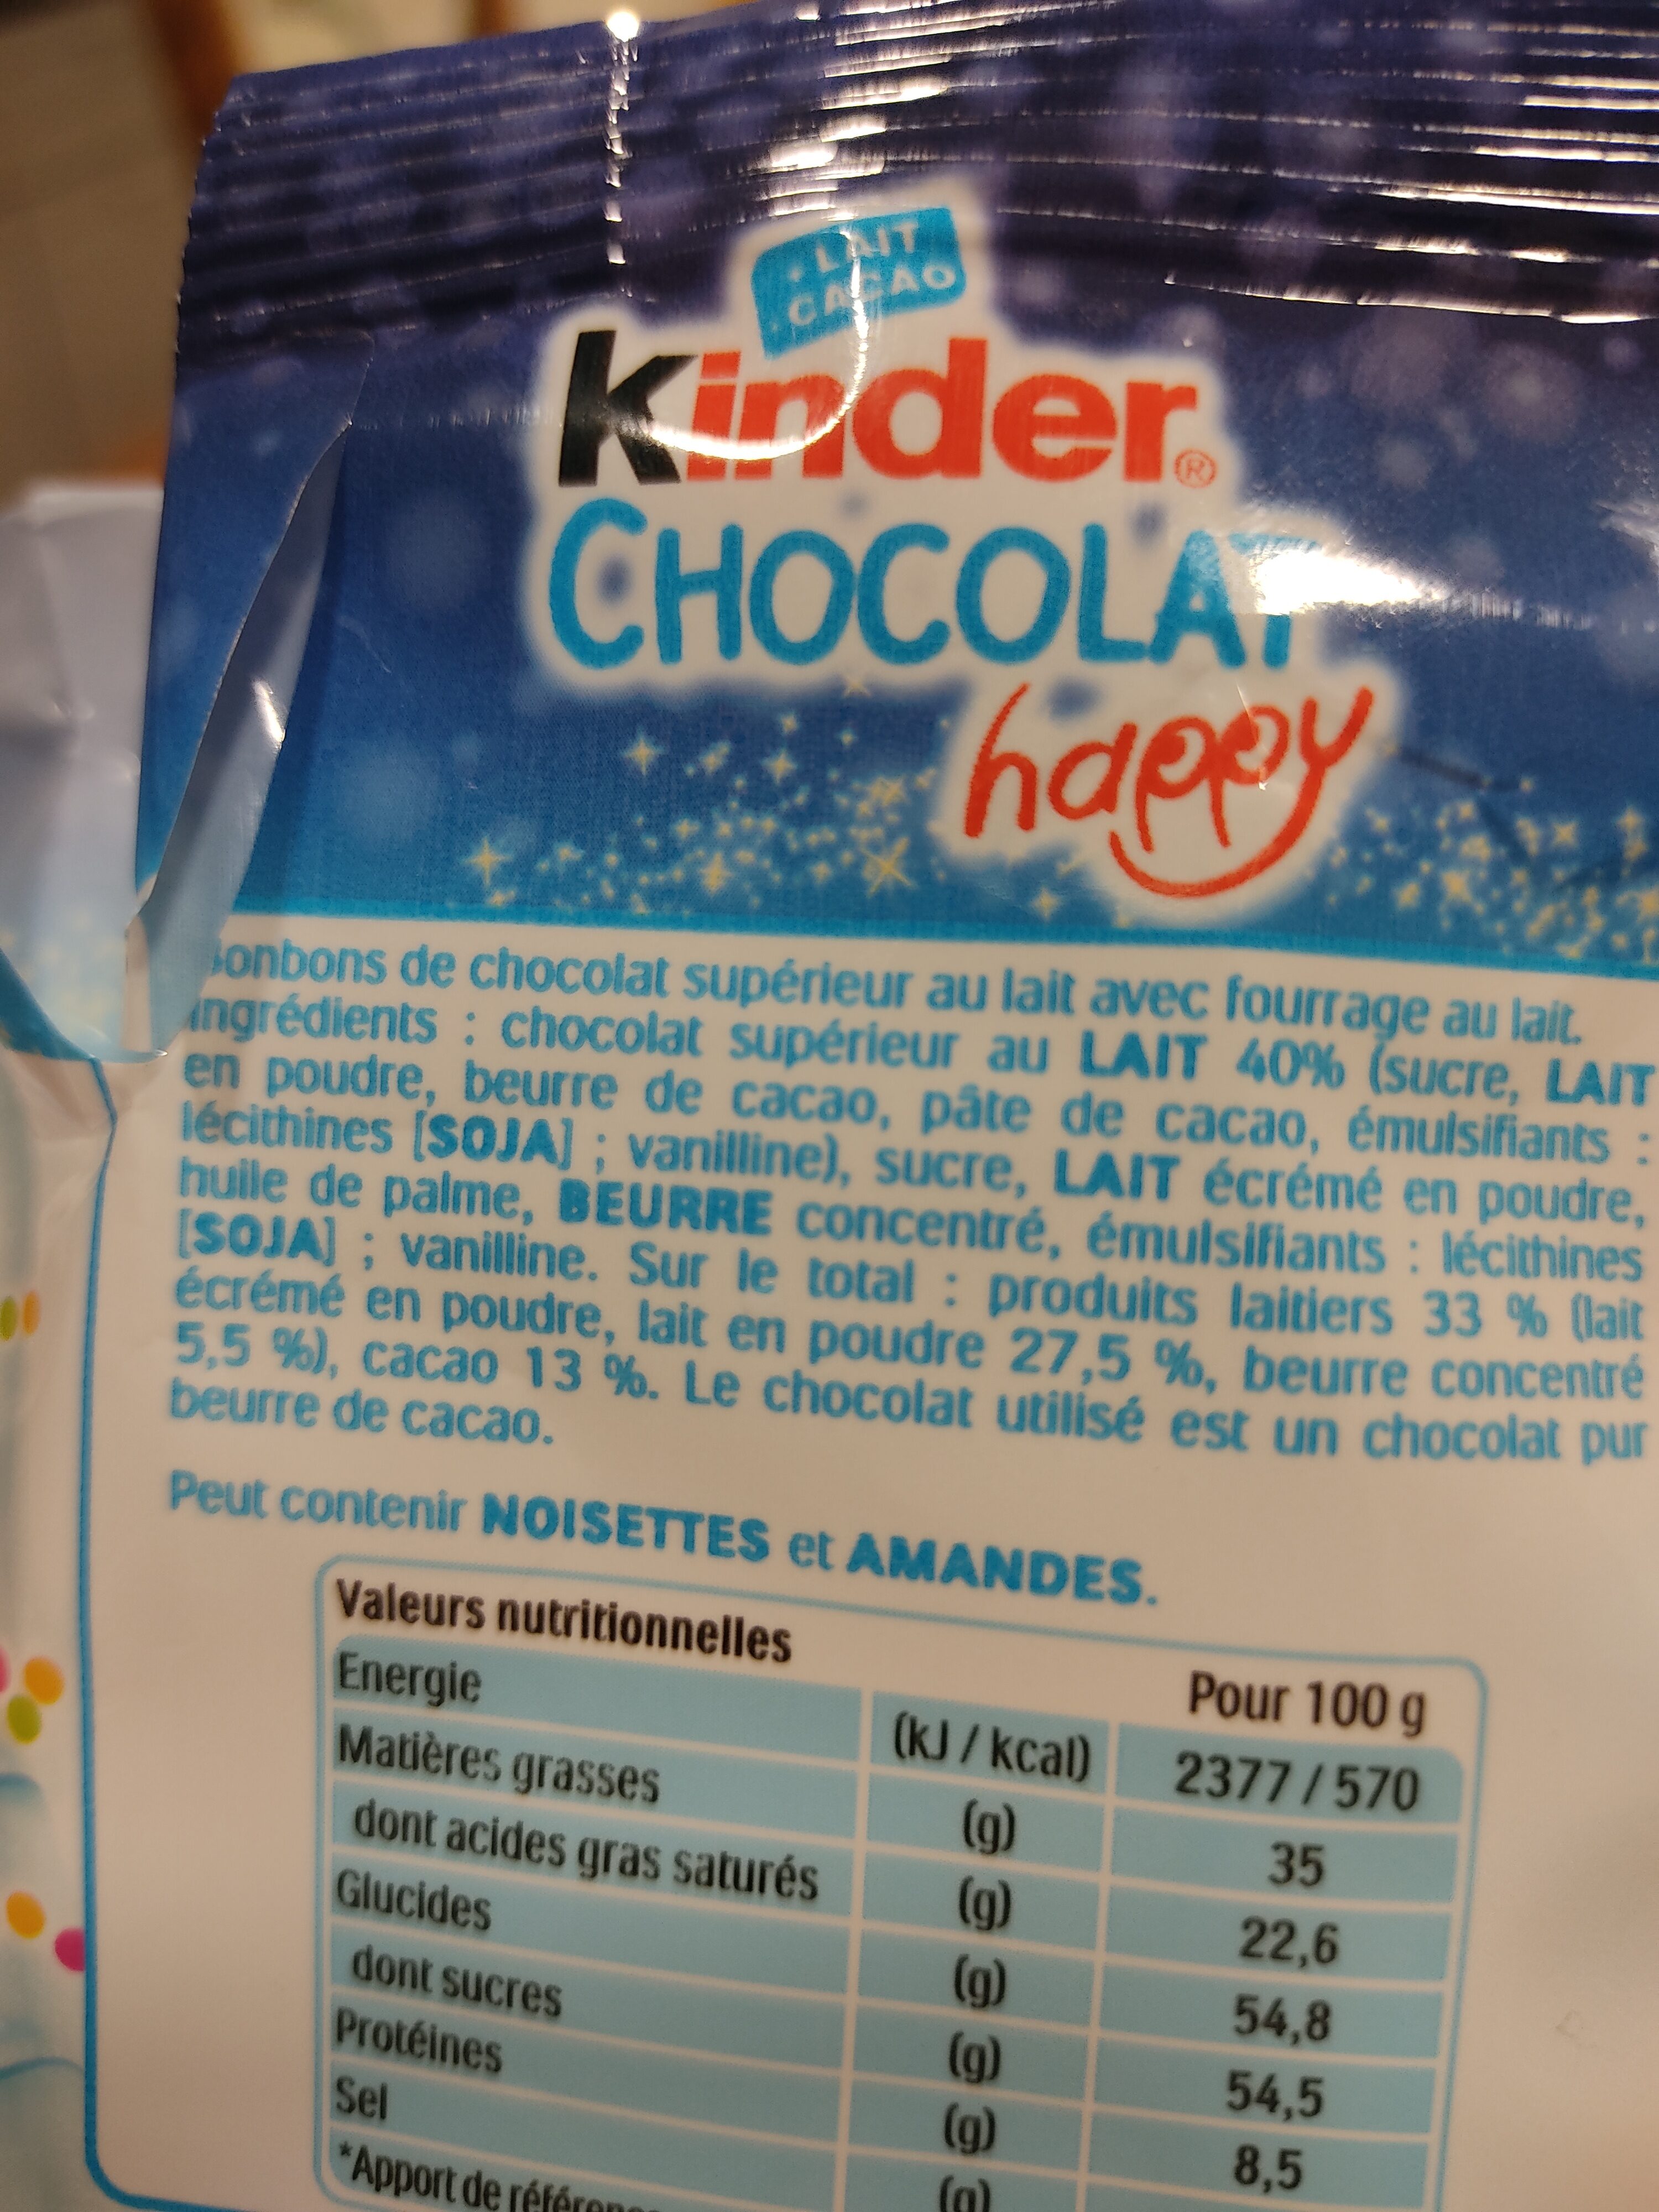 Kinder chocolat medaillon sachet de 102g - Ingredients - fr